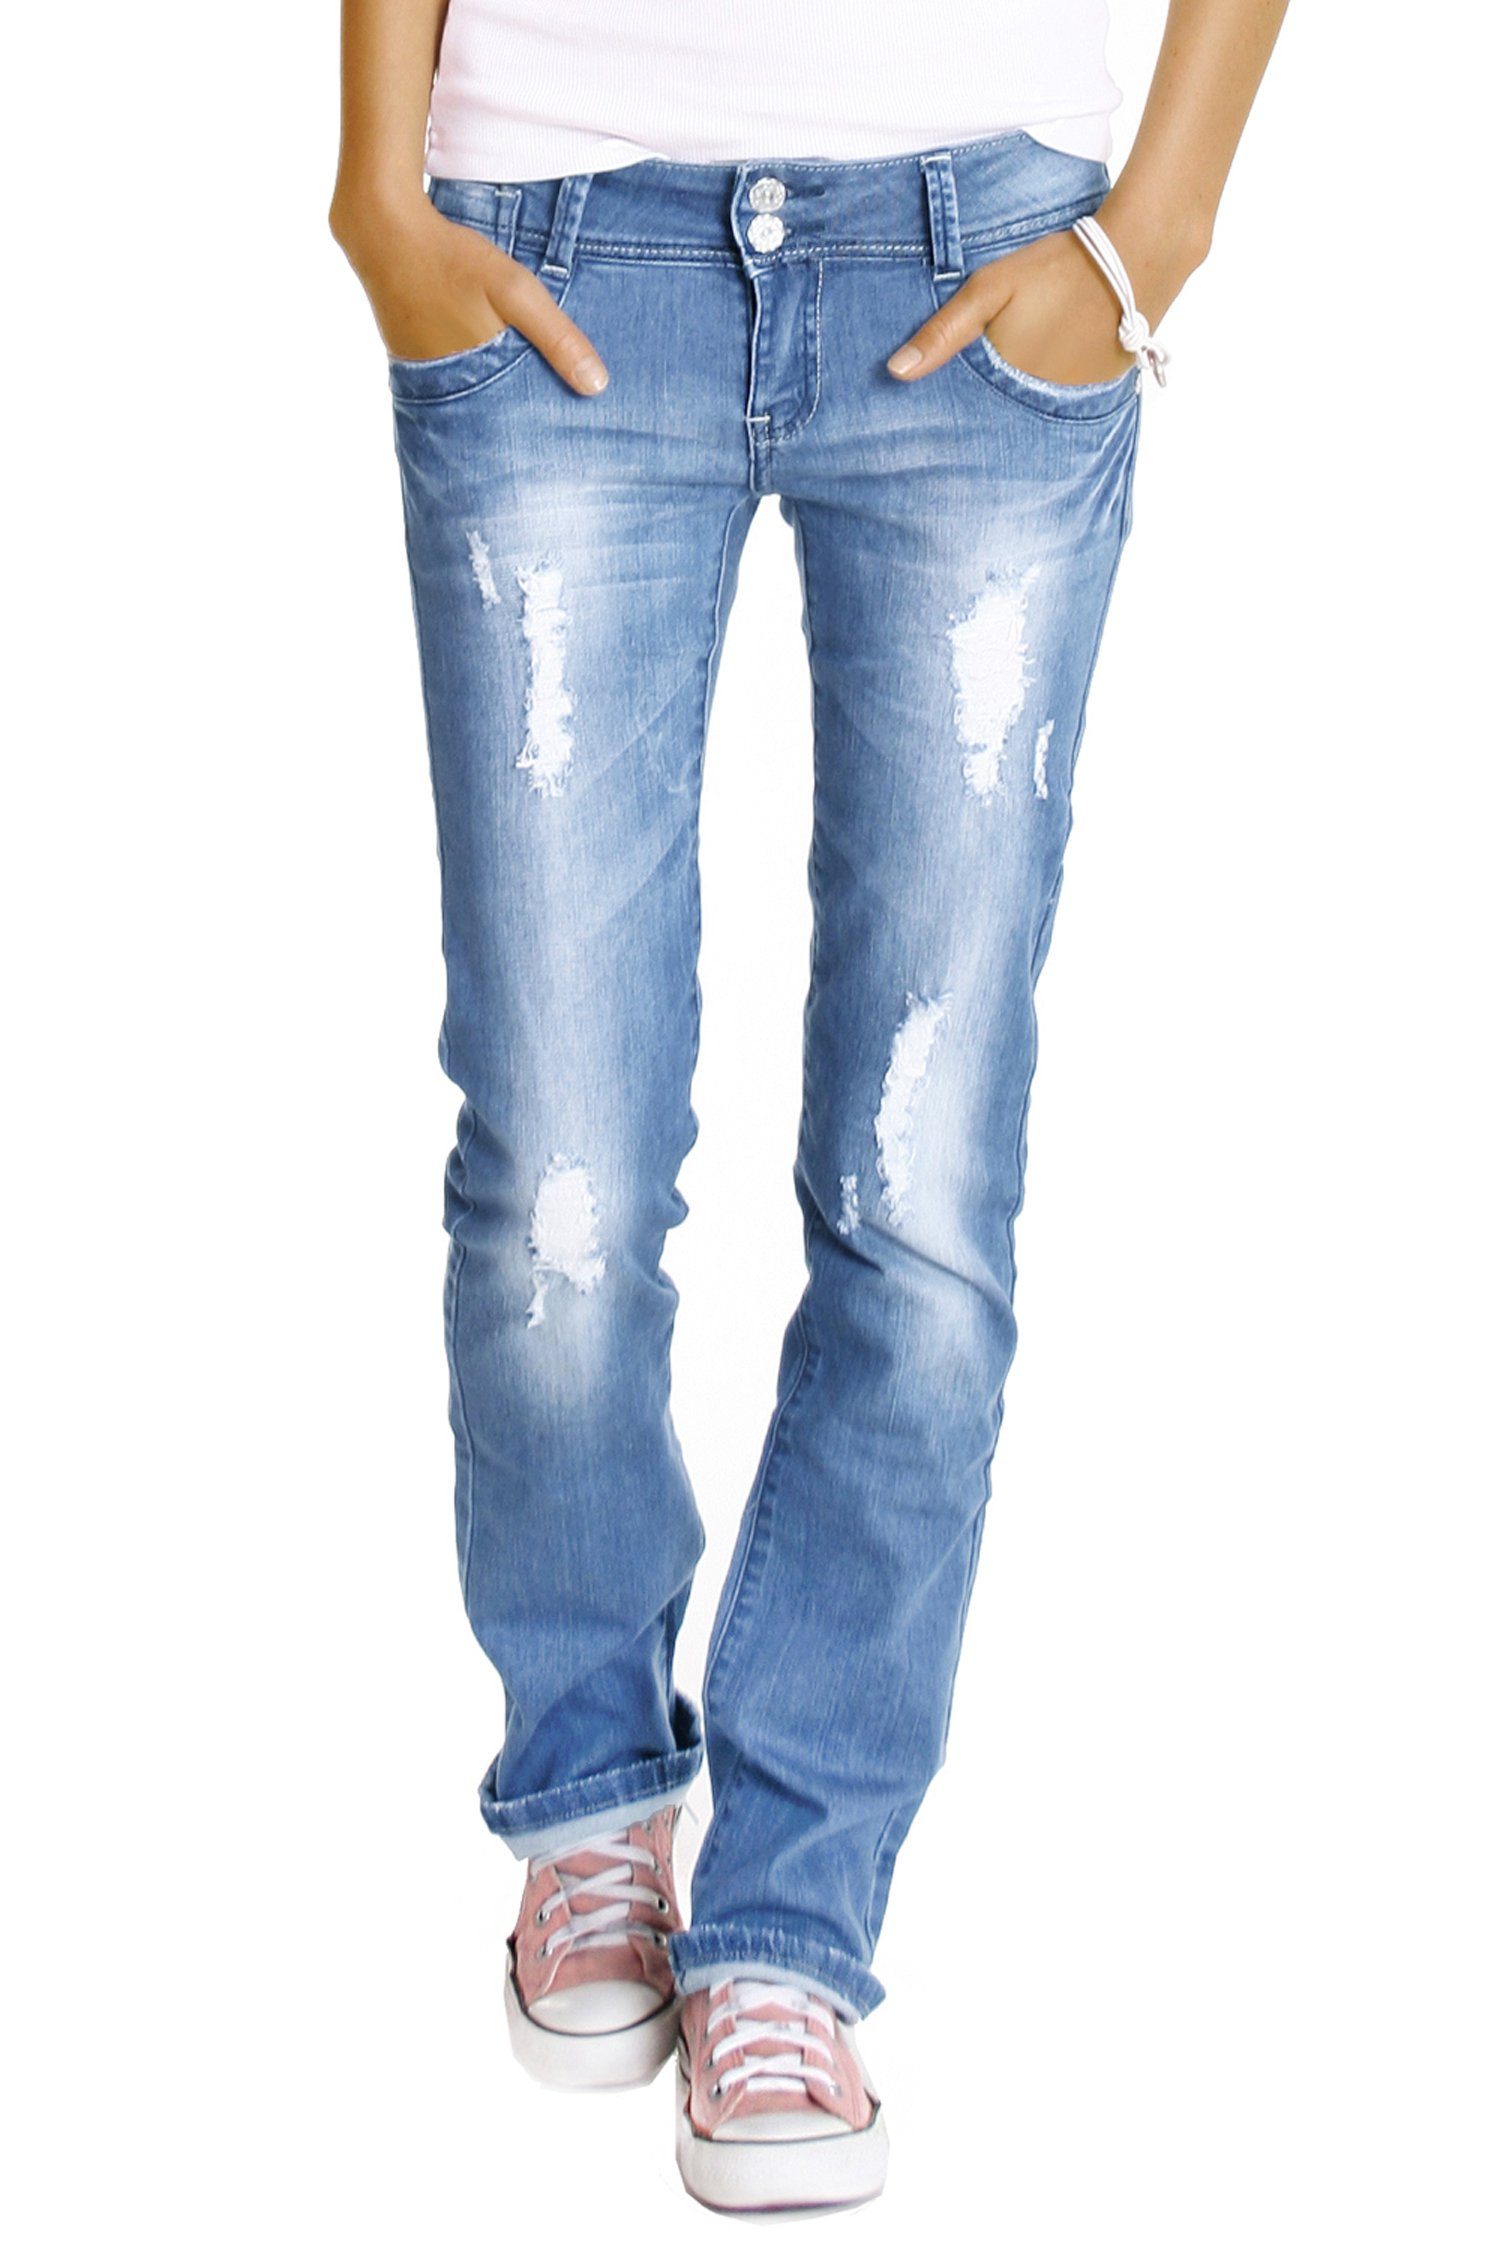 be styled Bootcut-Jeans Hüftjeans destroyed Джинси буткат Hose zerrissen gerades bein - j28x mit Stretch-Anteil, 5-Pocket-Style